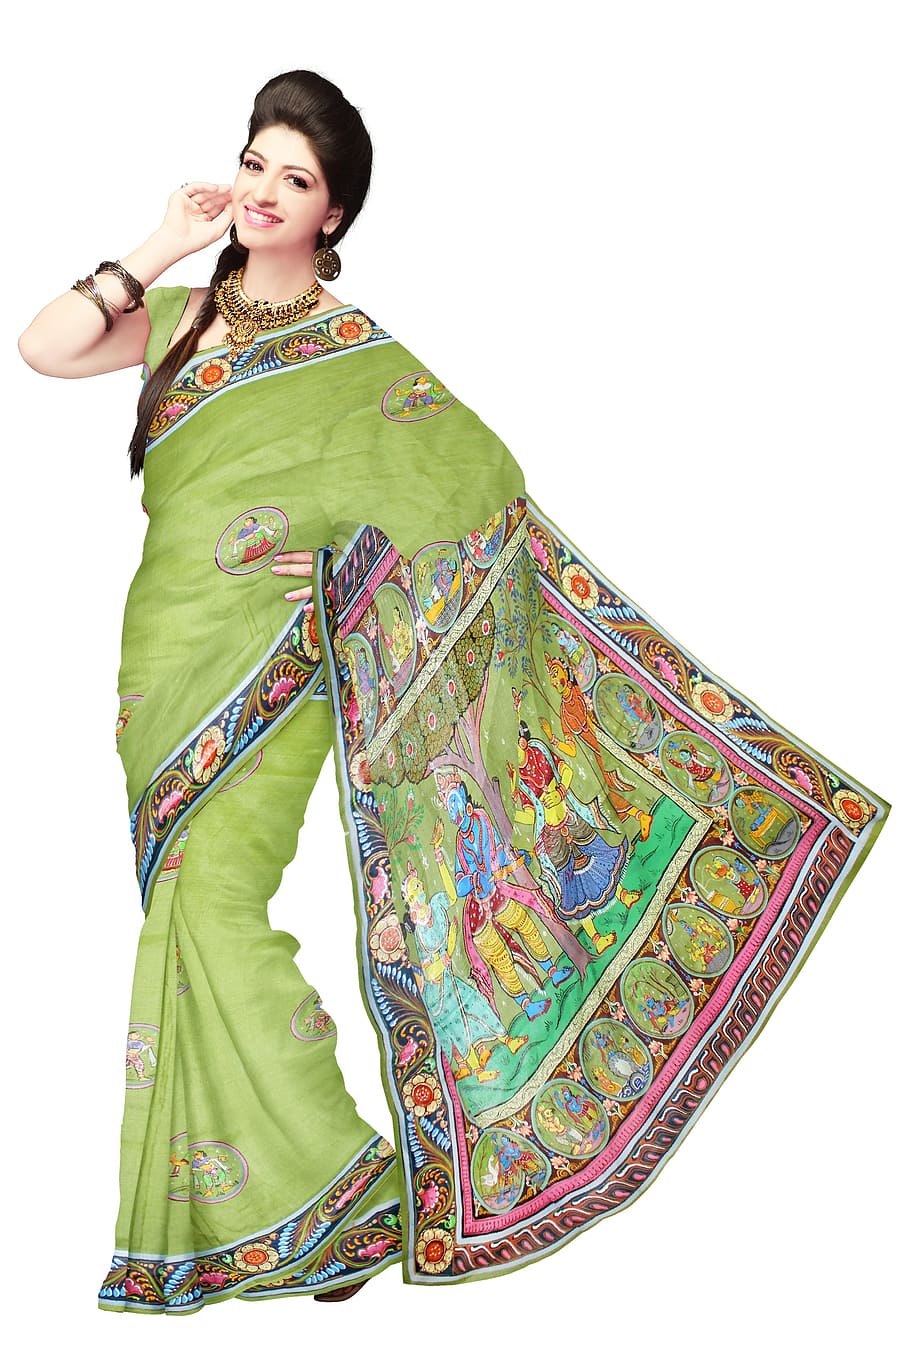 women's green saree dress, fashion, silk, woman, model, clothing